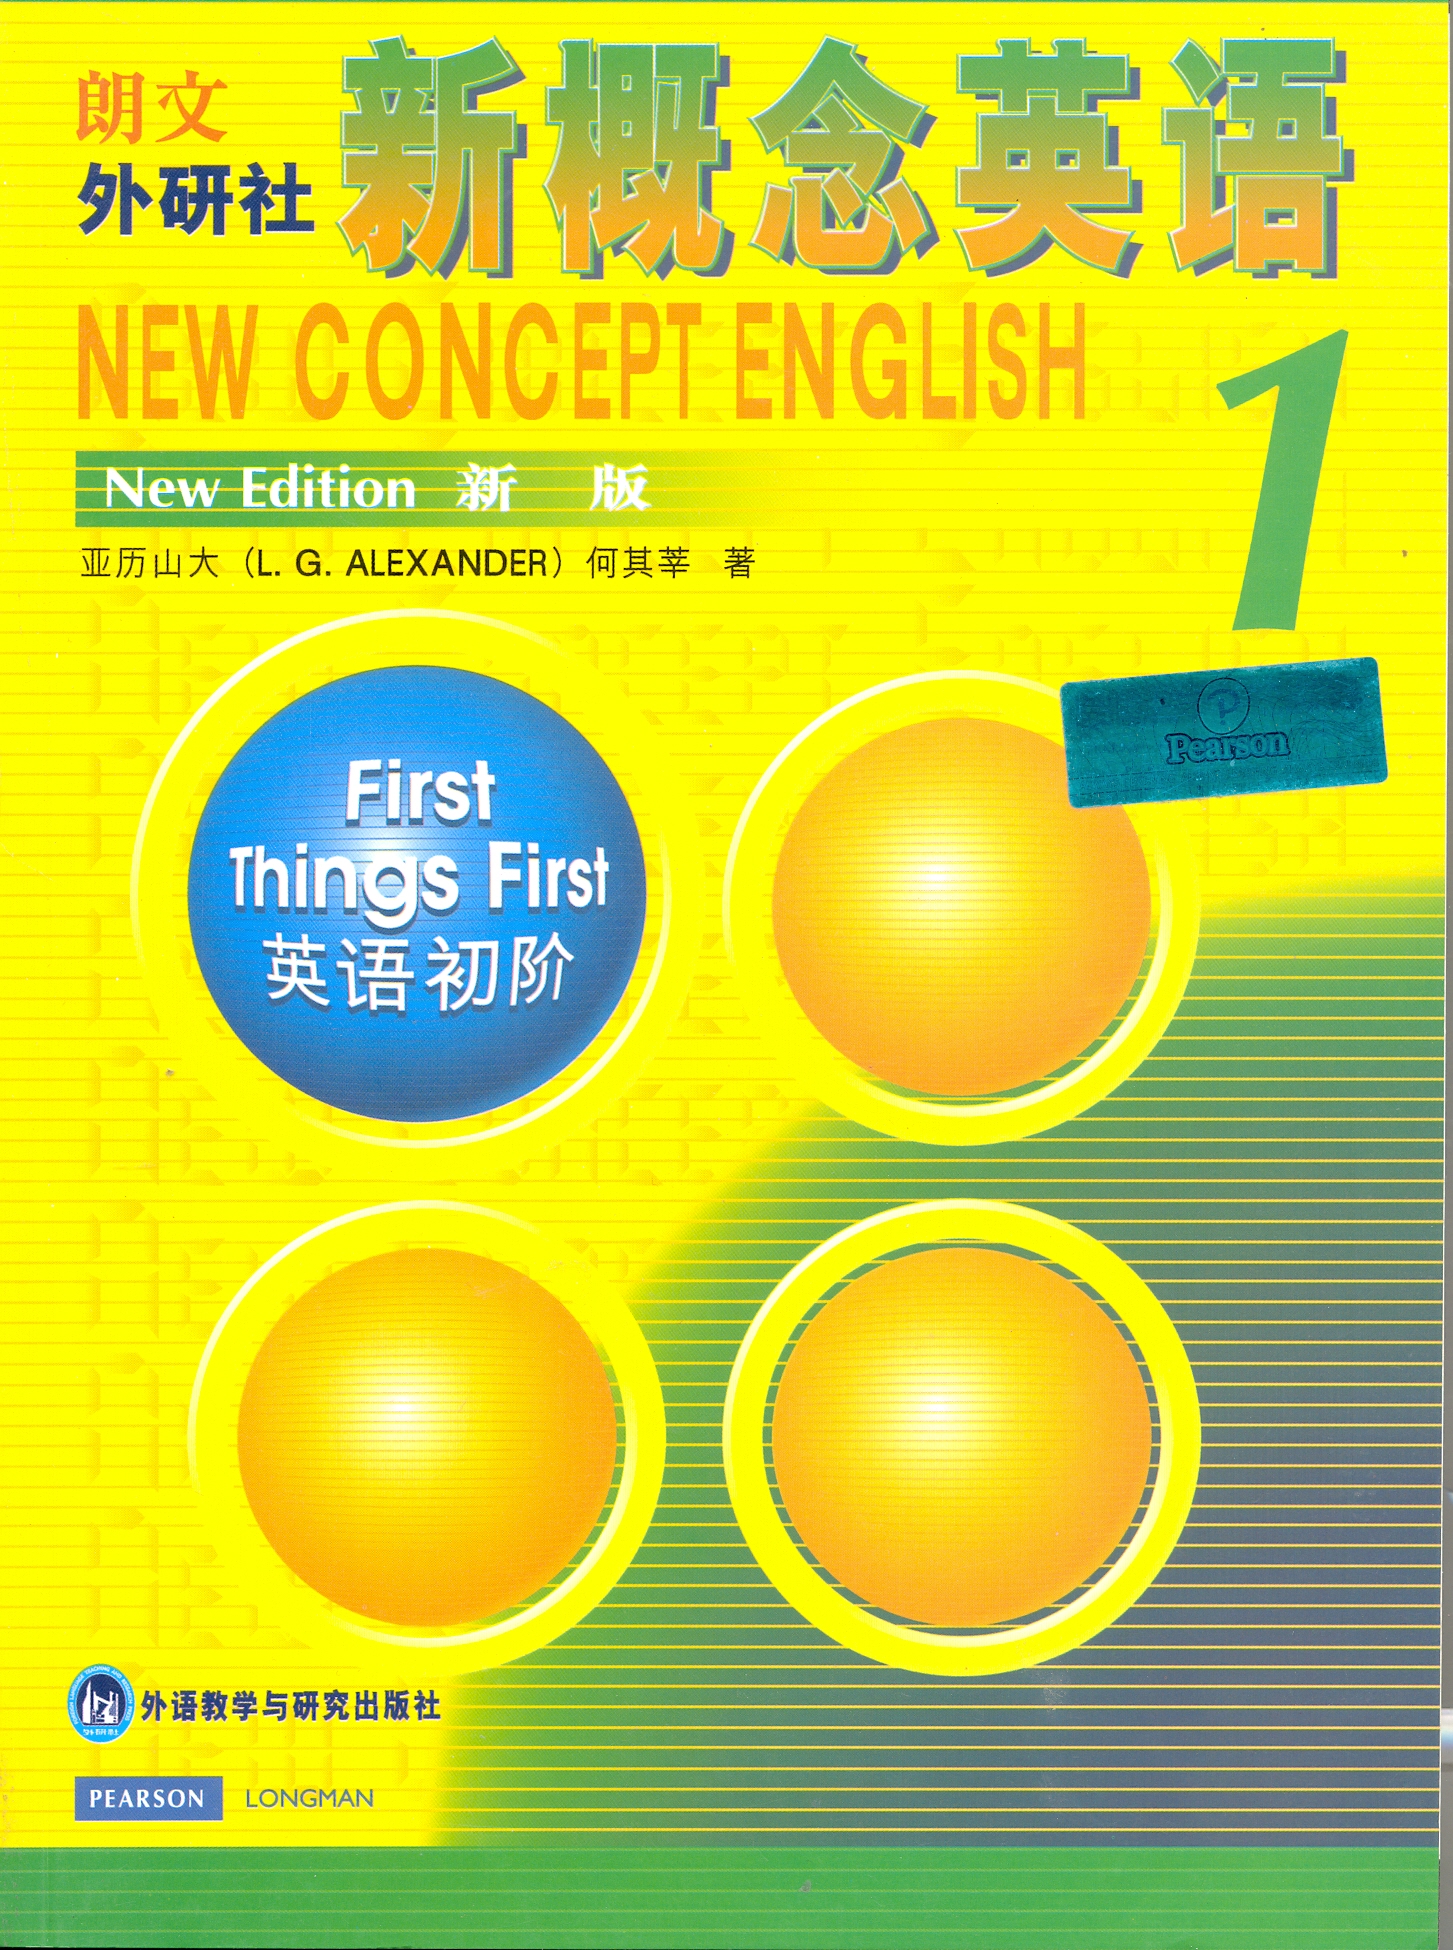 New Concept English.